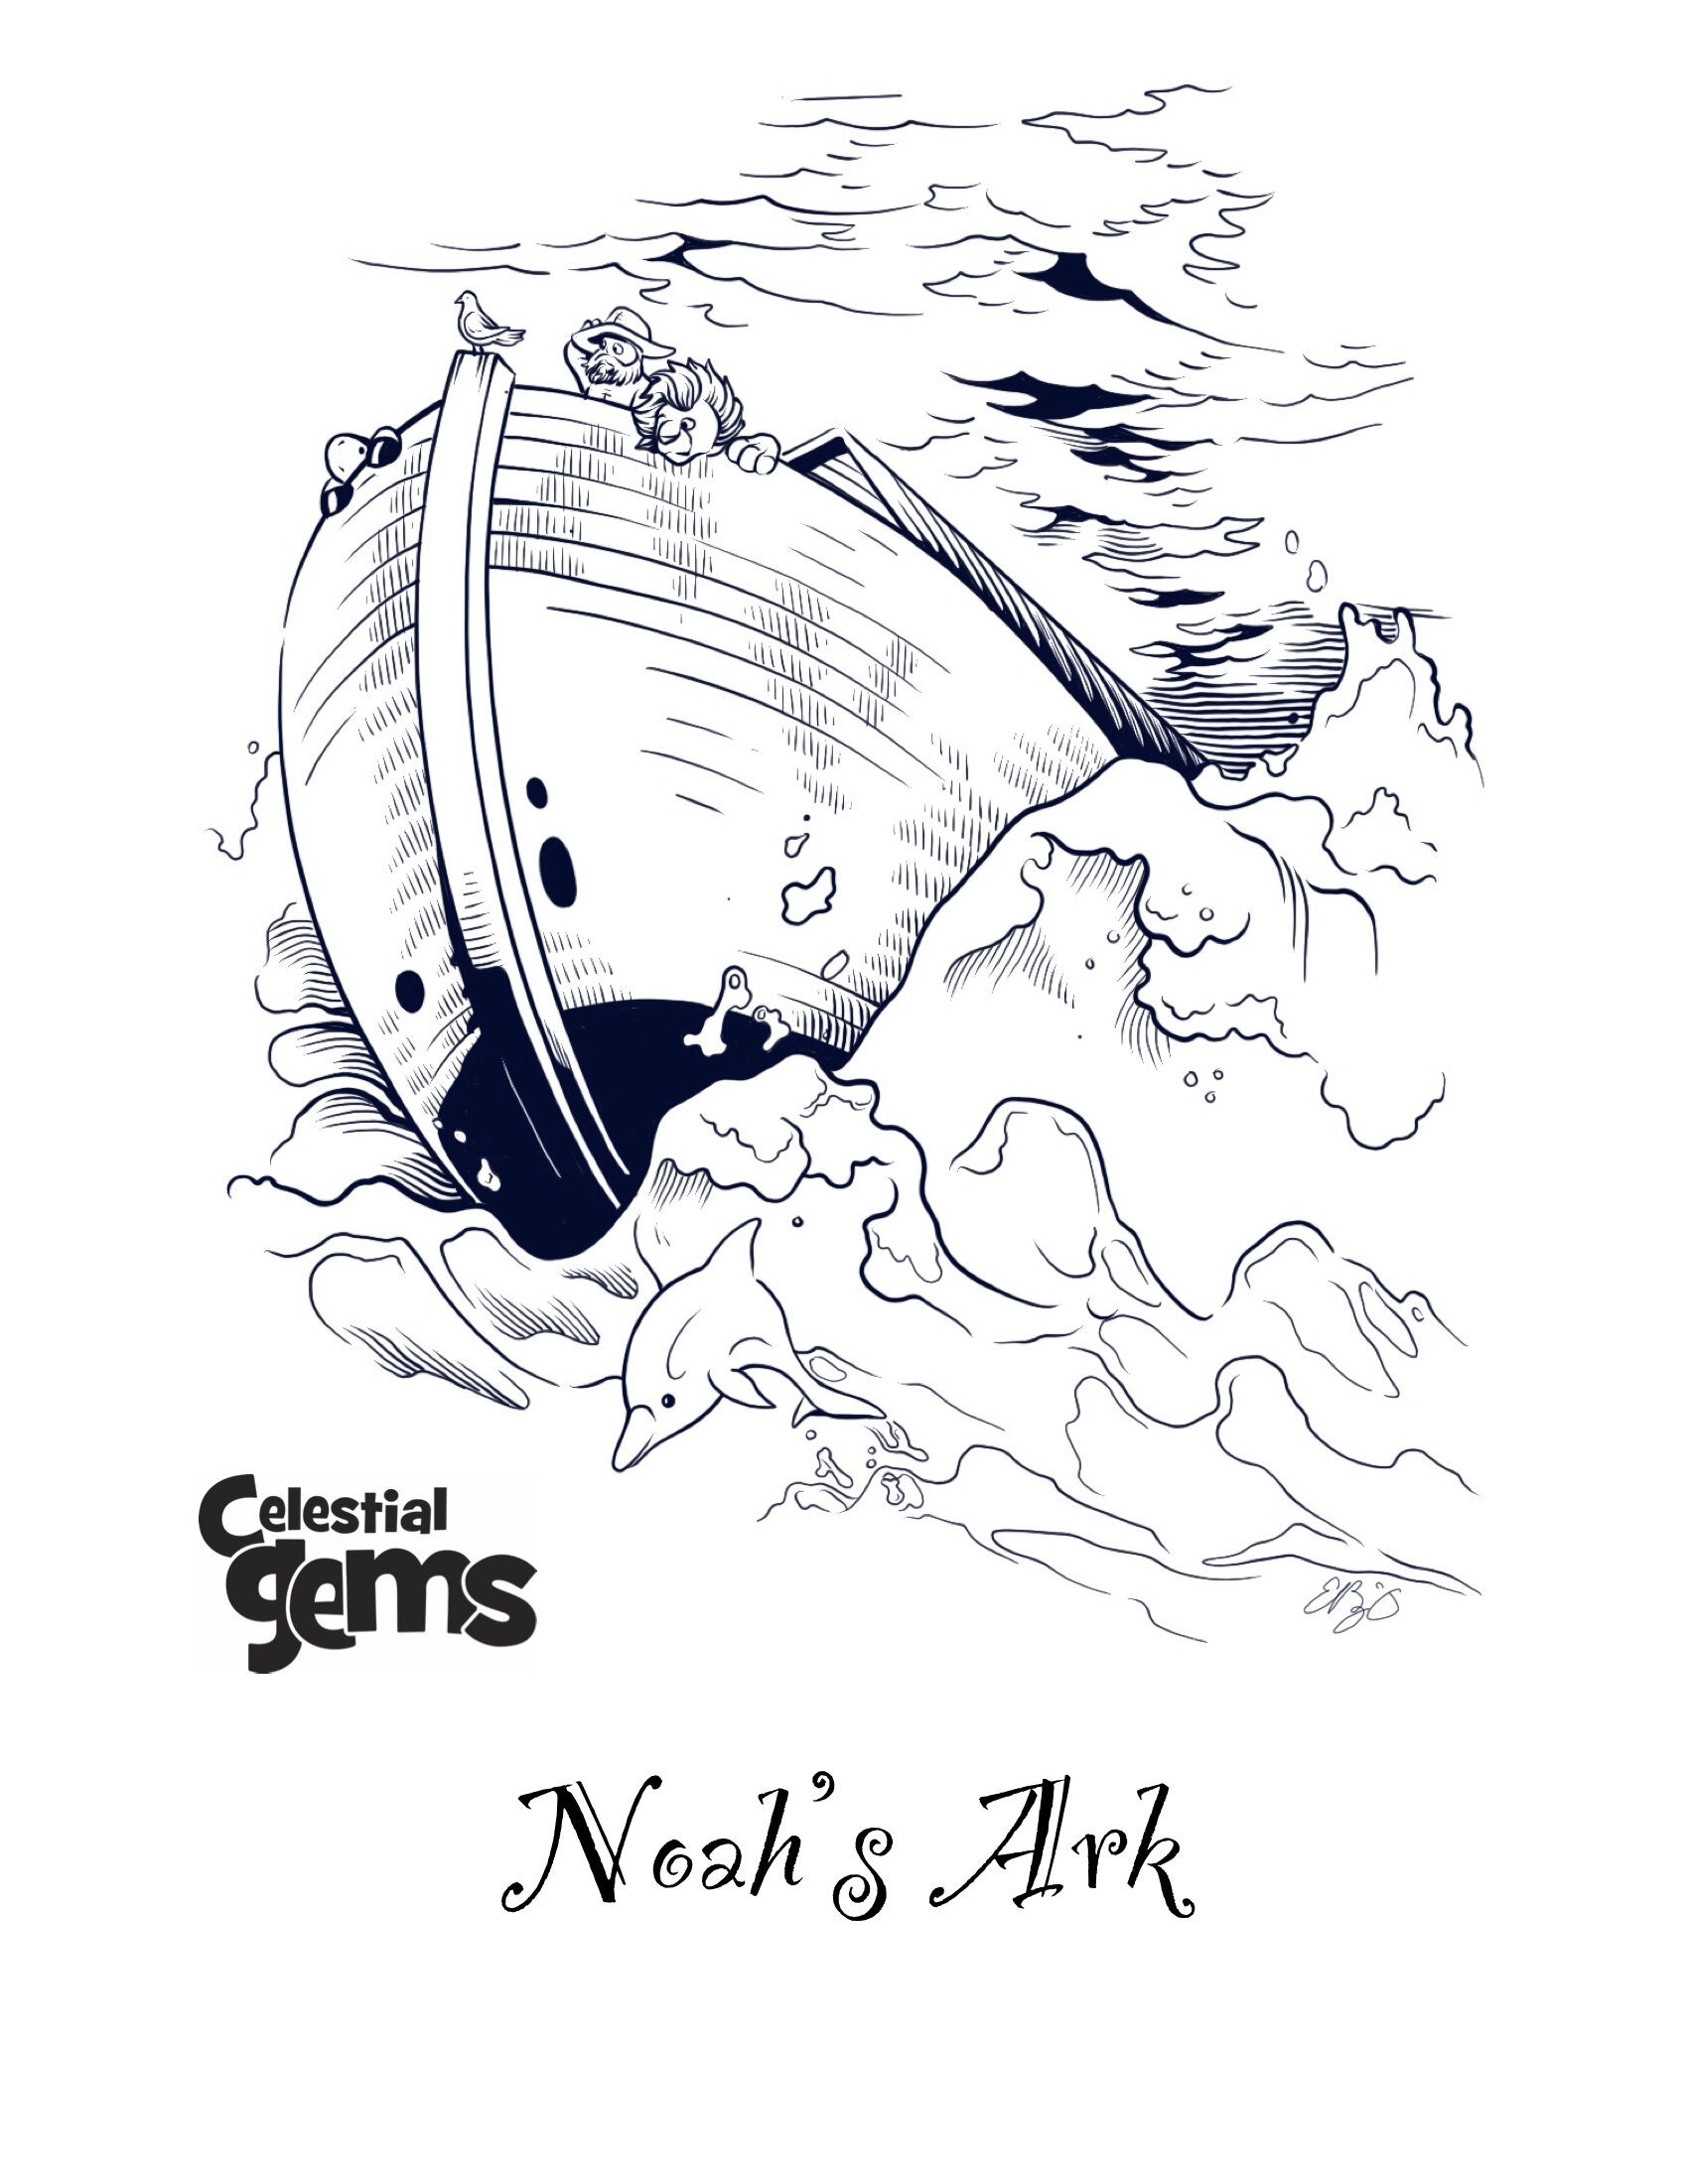 Noah’s ark_logo.jpg